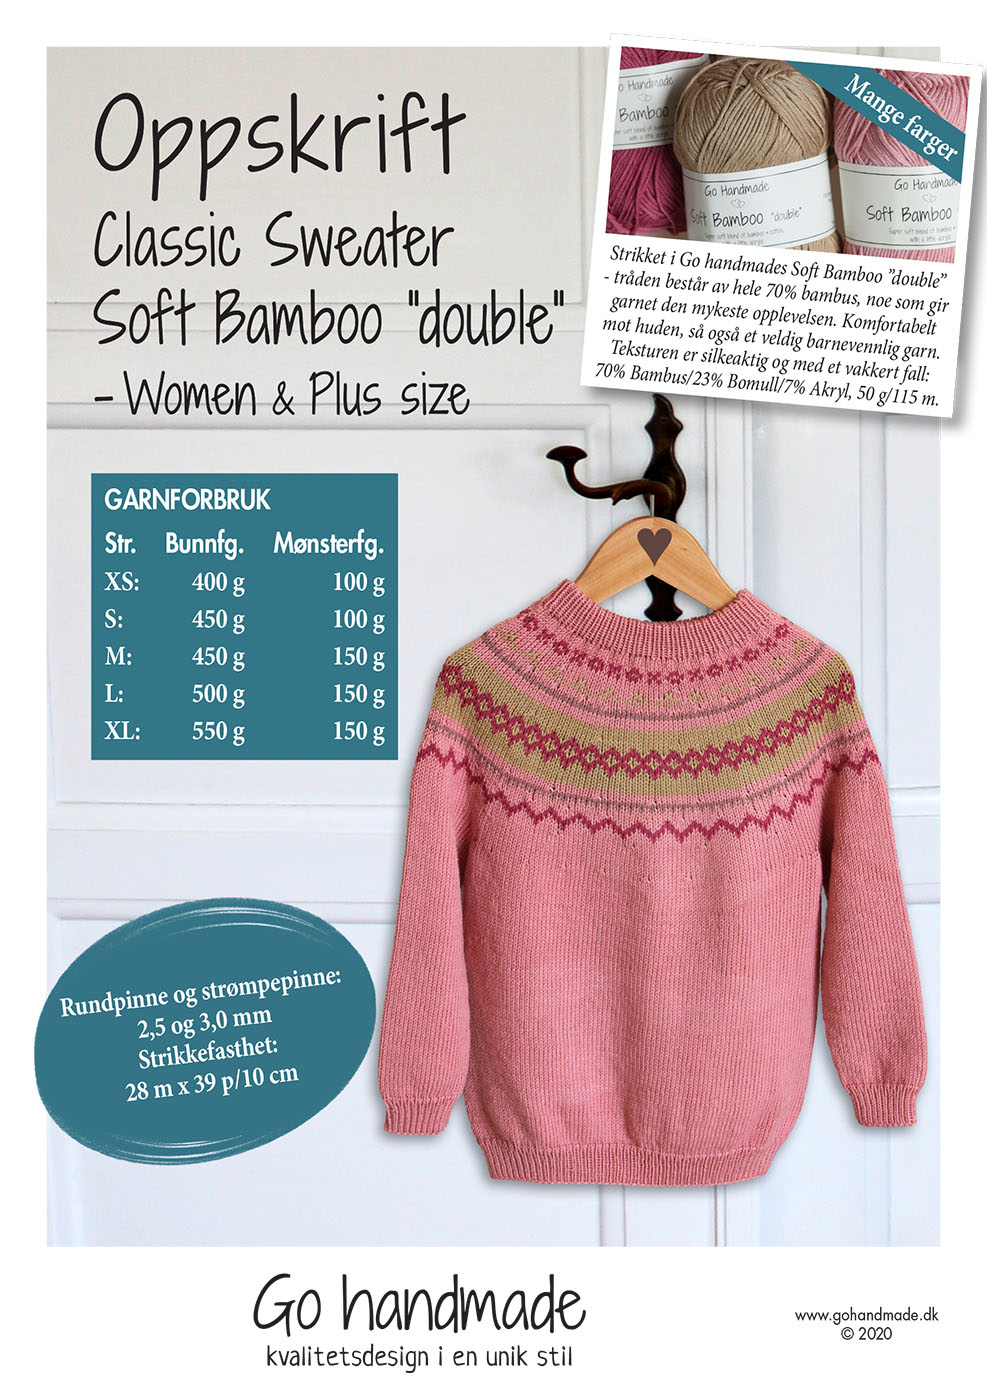 inerti Symposium Proportional Classic Sweater Soft Double - Women & Plus size (XS - XL) - NO - Beklædning  - Go handmade